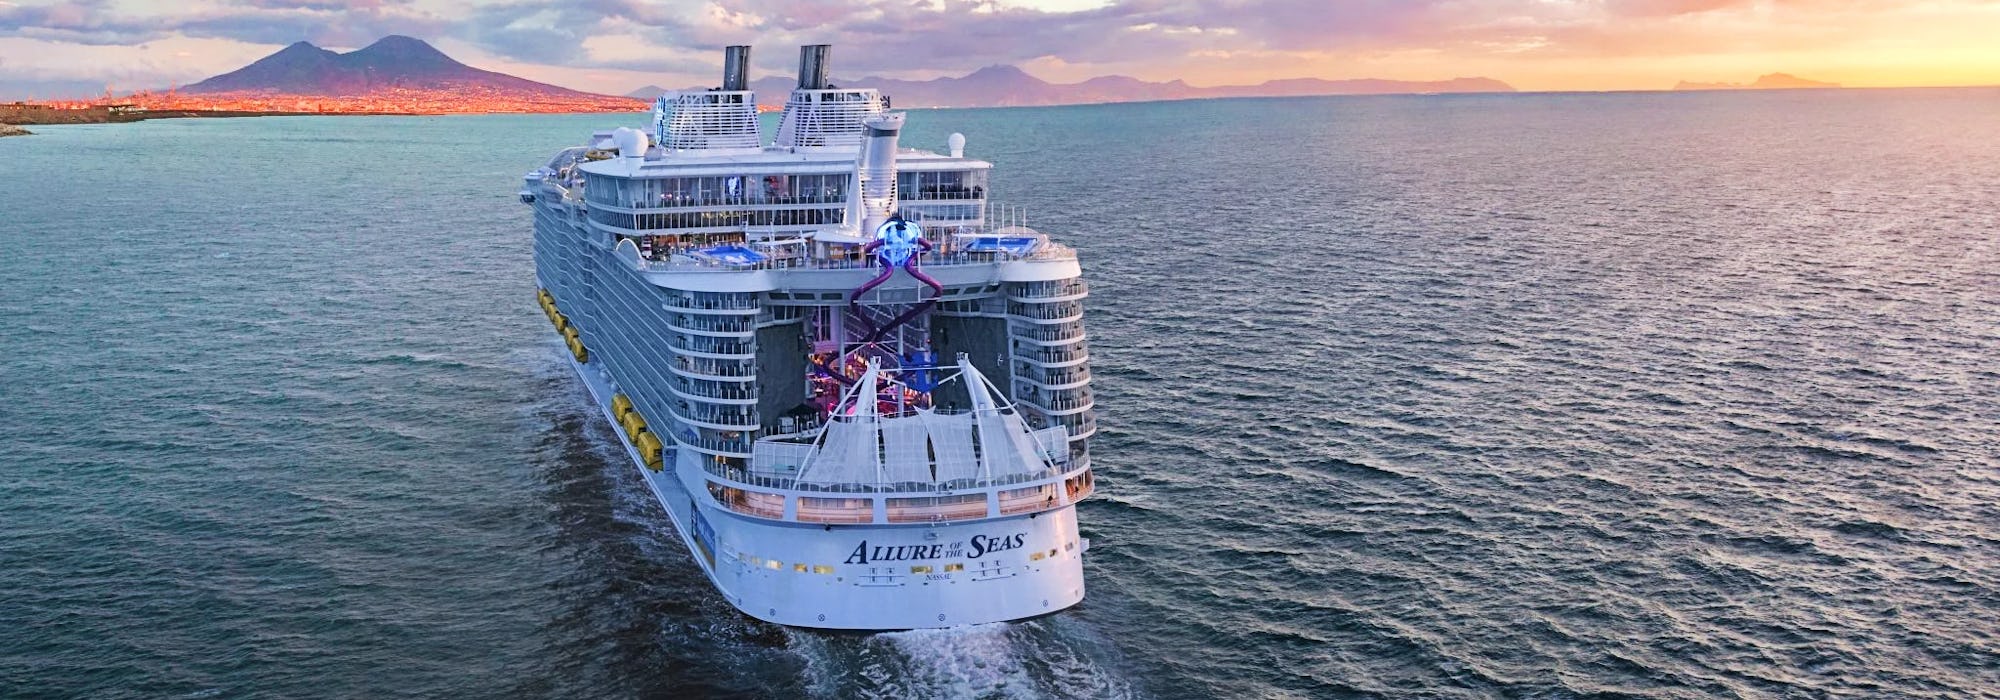 Allure of the Seas - Royal Caribbean